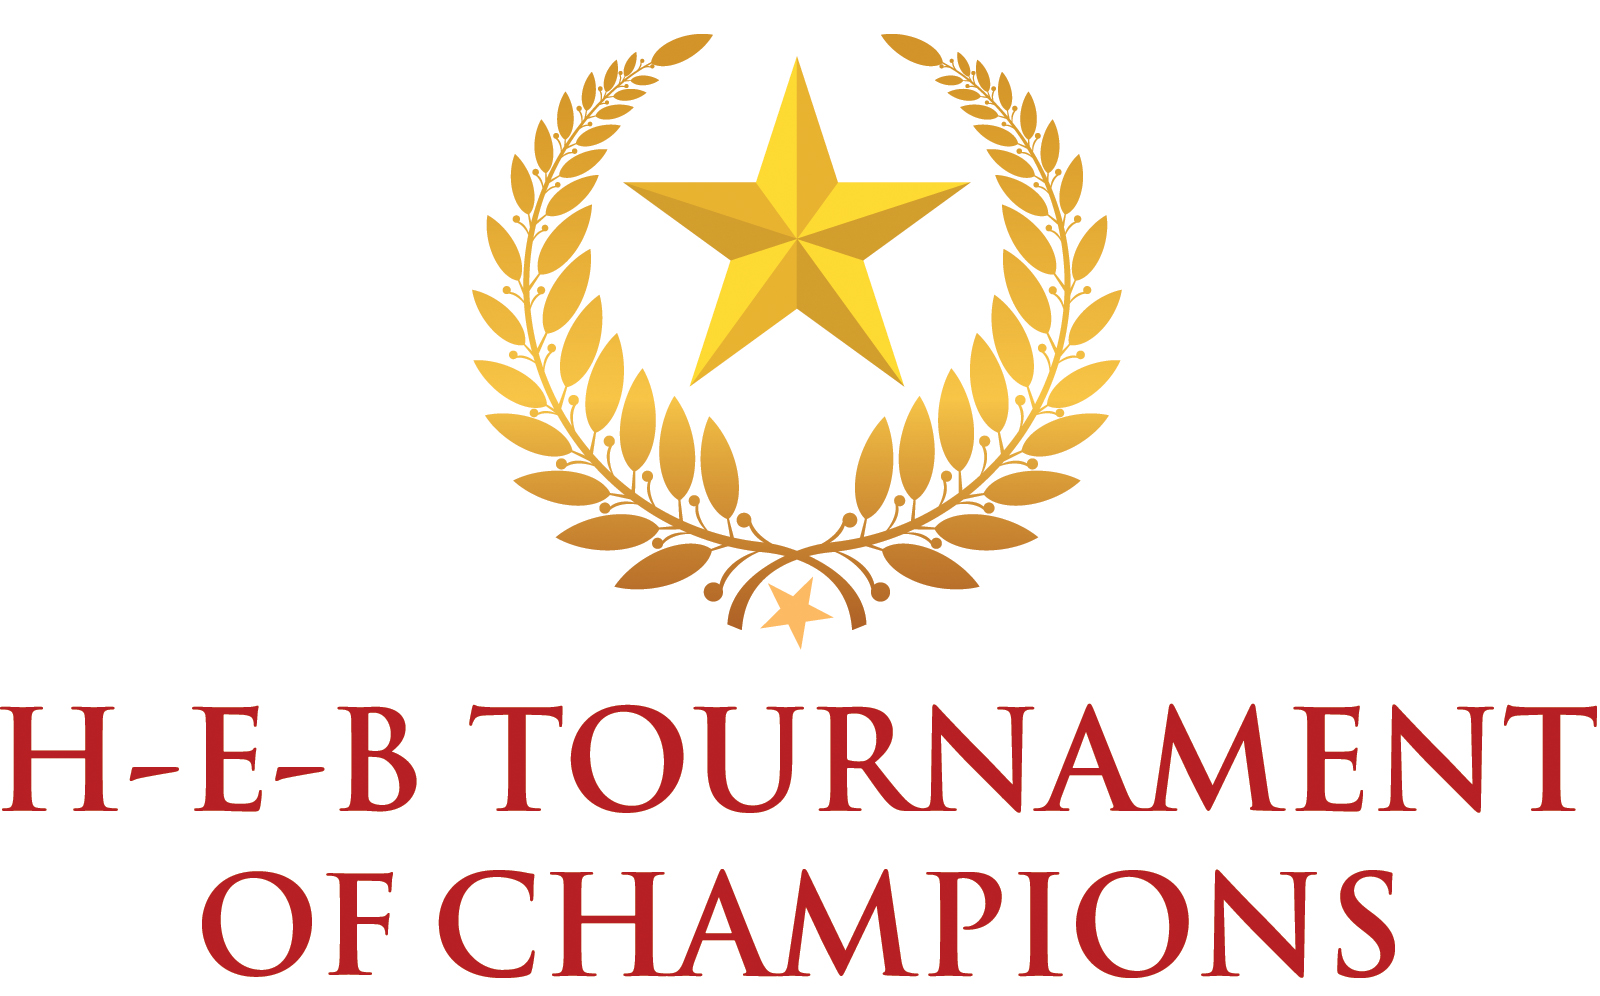 HEB Tournament of Champions graphic